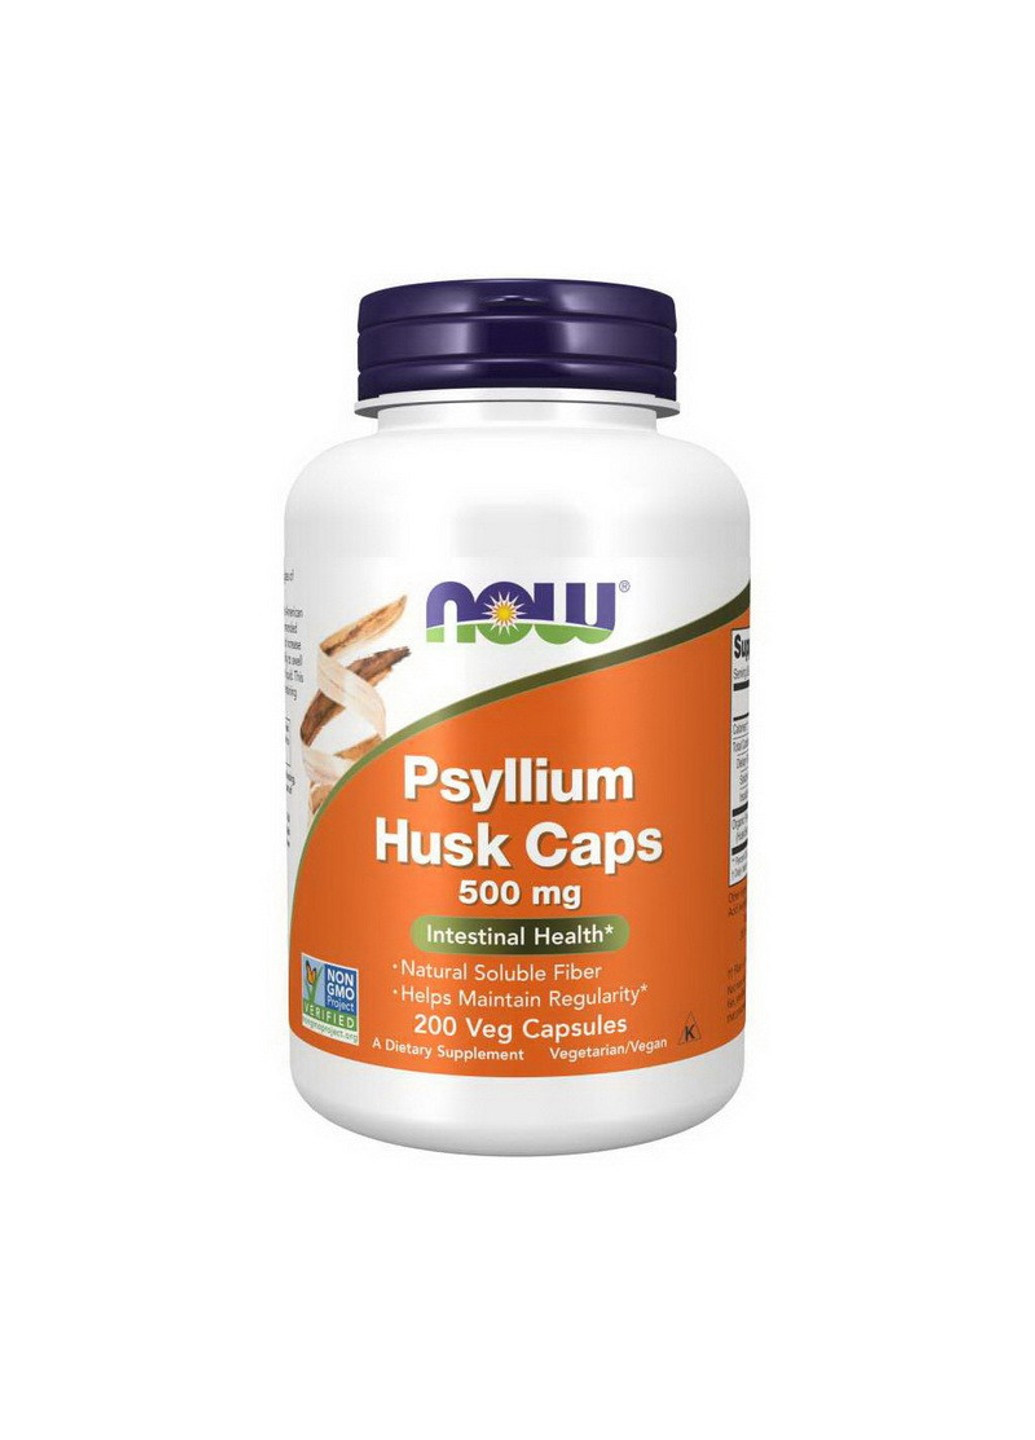 Подорожник (Псилиум) Psyllium Husk Caps 500 mg (200 капсул) нау фудс Now Foods (255408304)